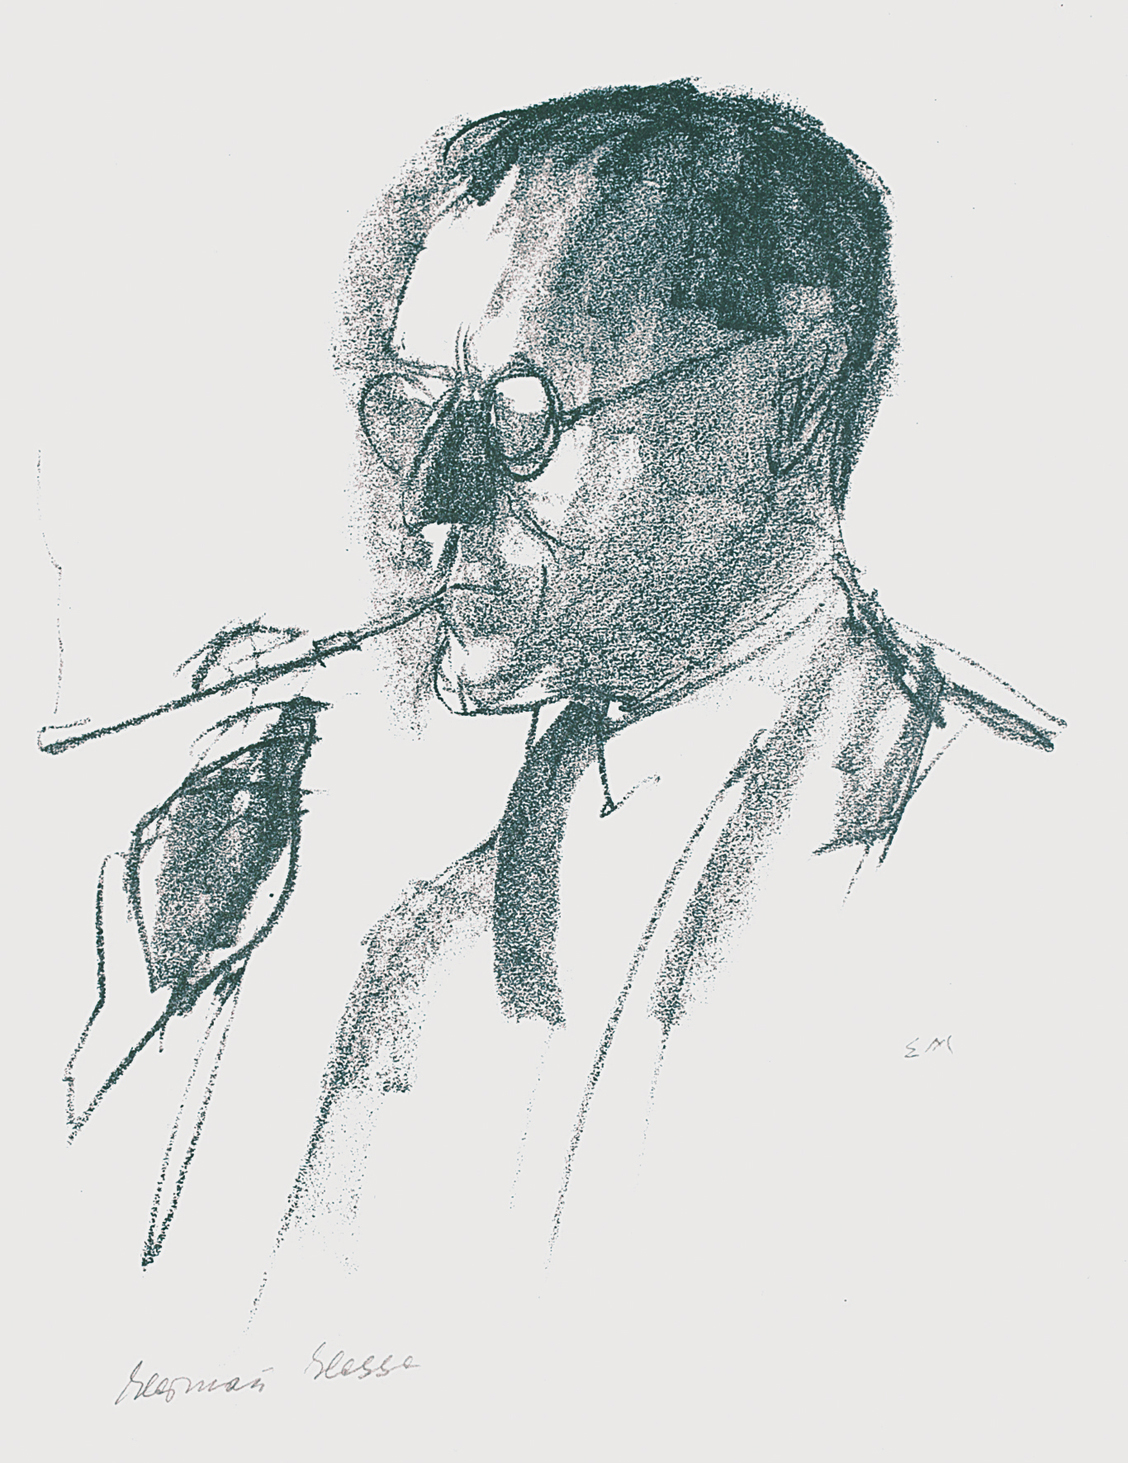 A portrait of Hermann Hesse